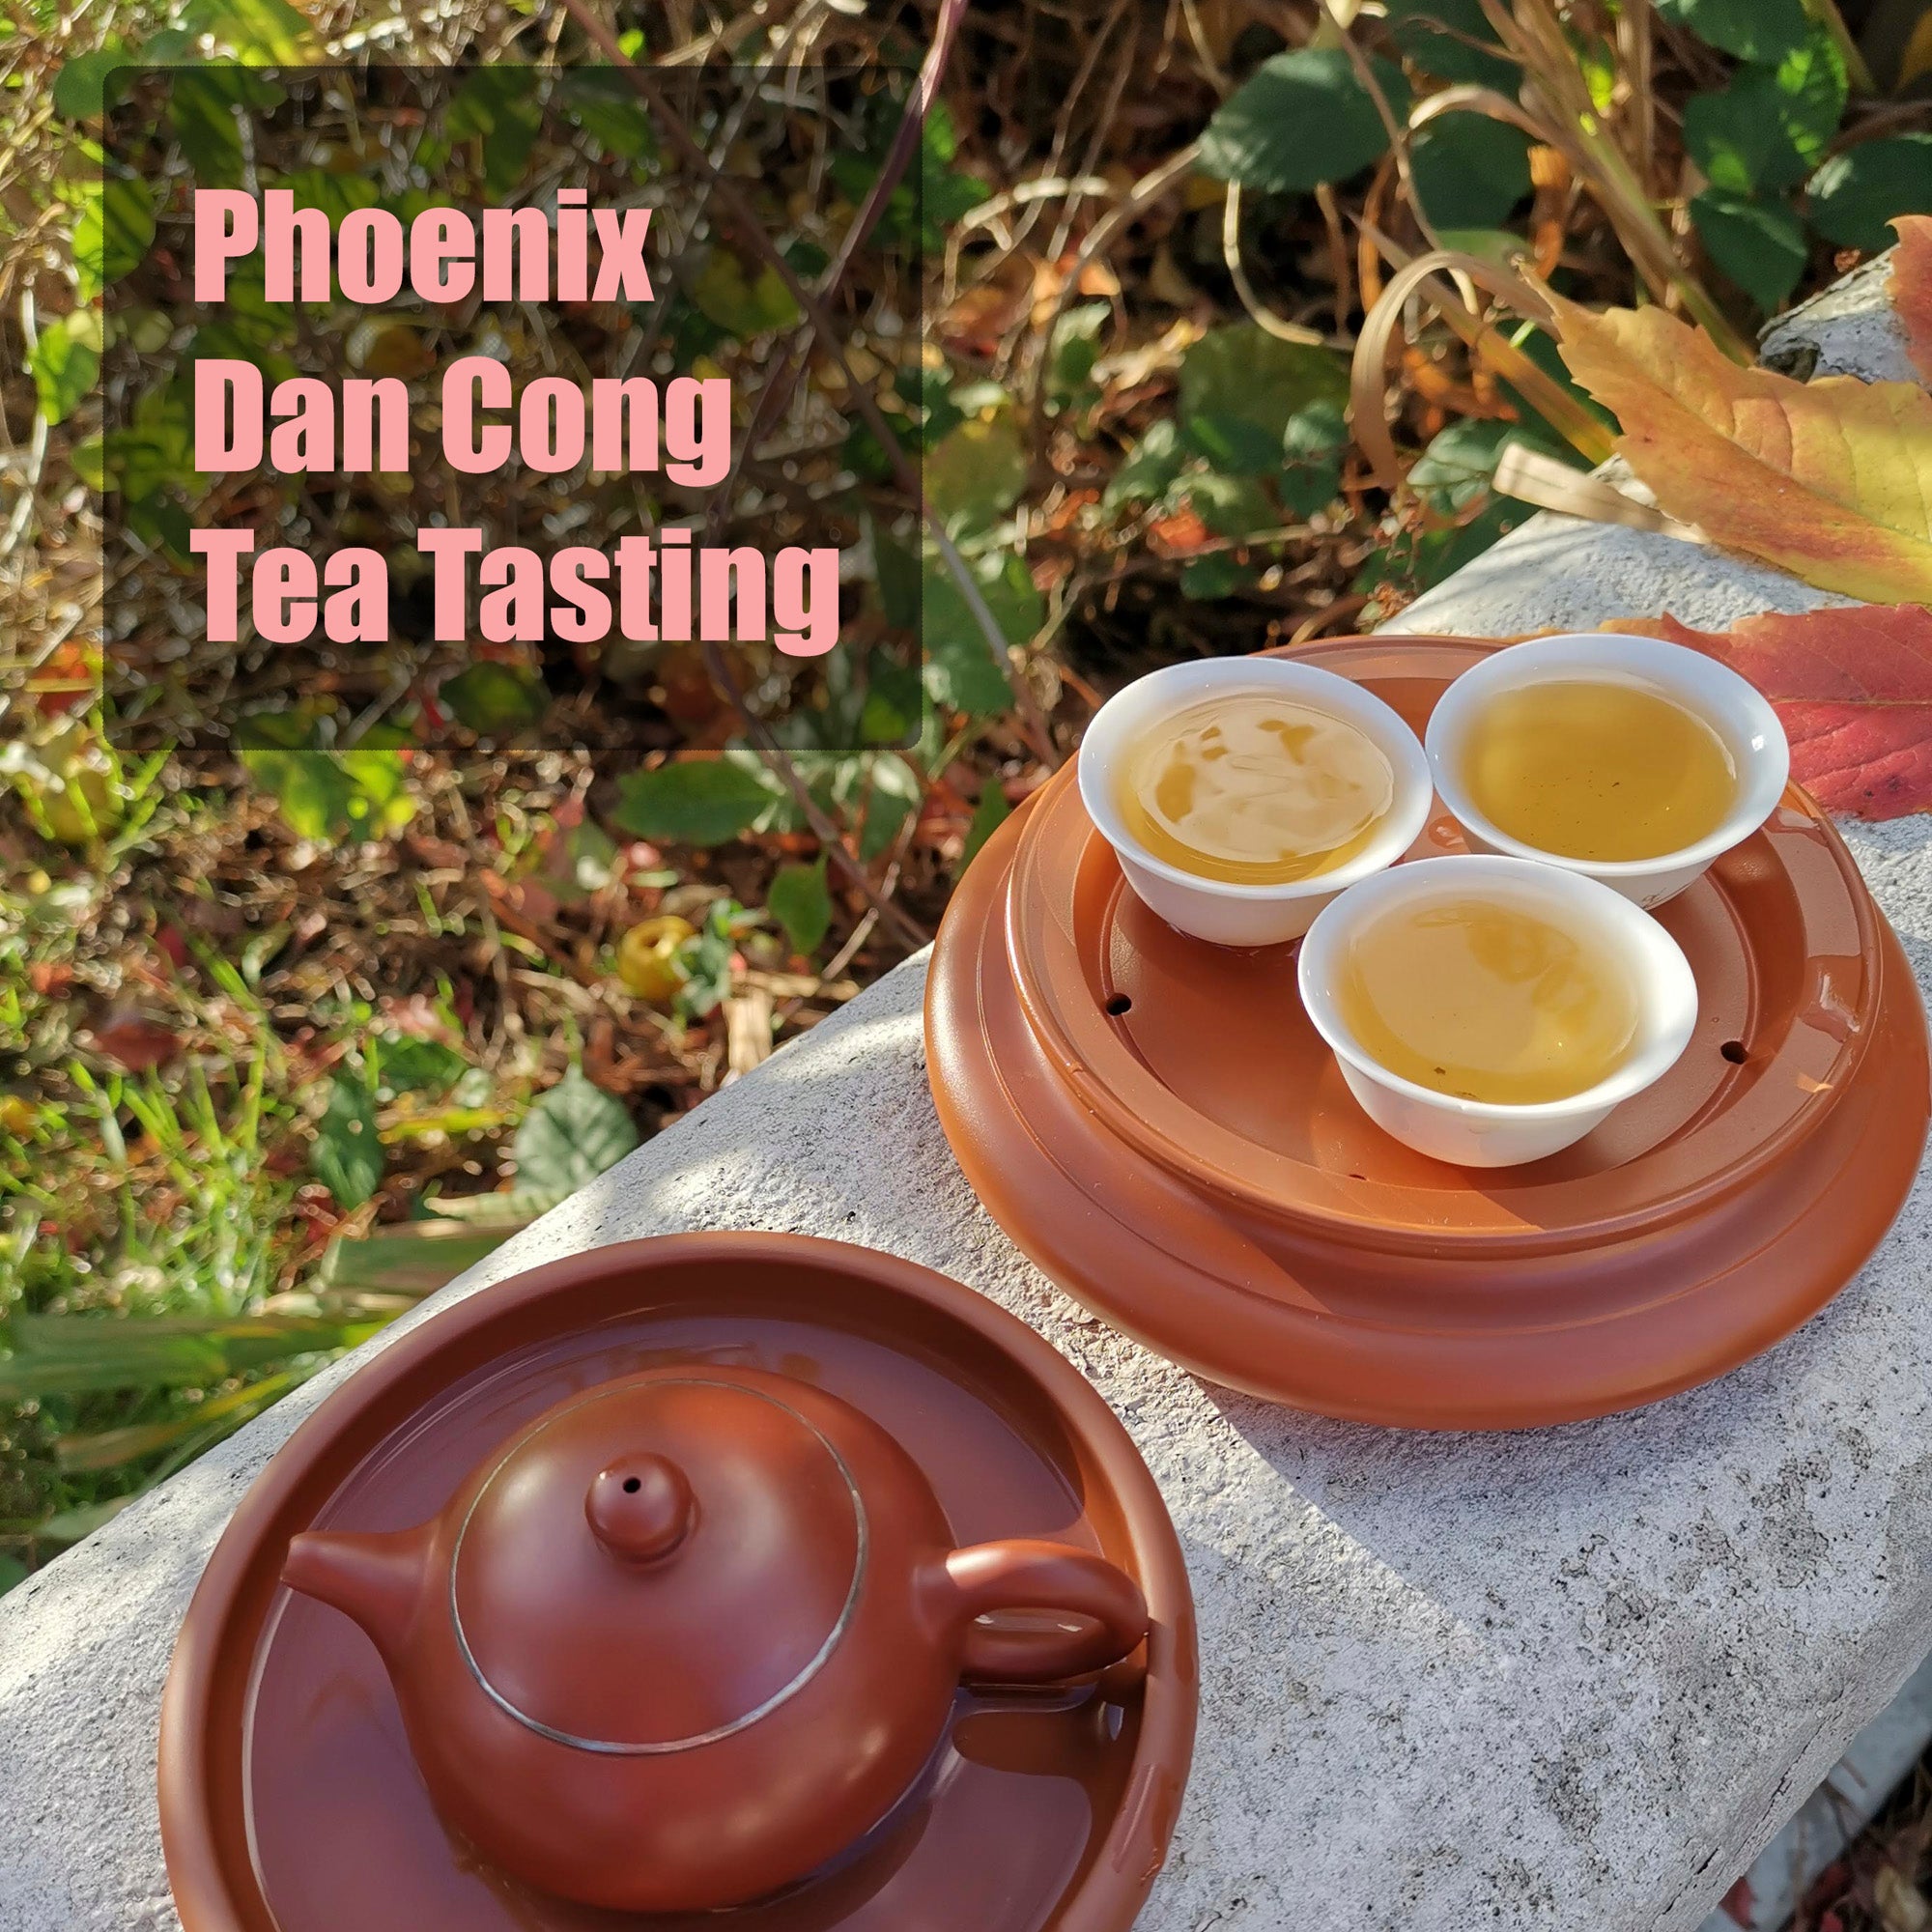 Phoenix Dan Cong Tea Tasting - Friday 17th FEB at 3:30pm